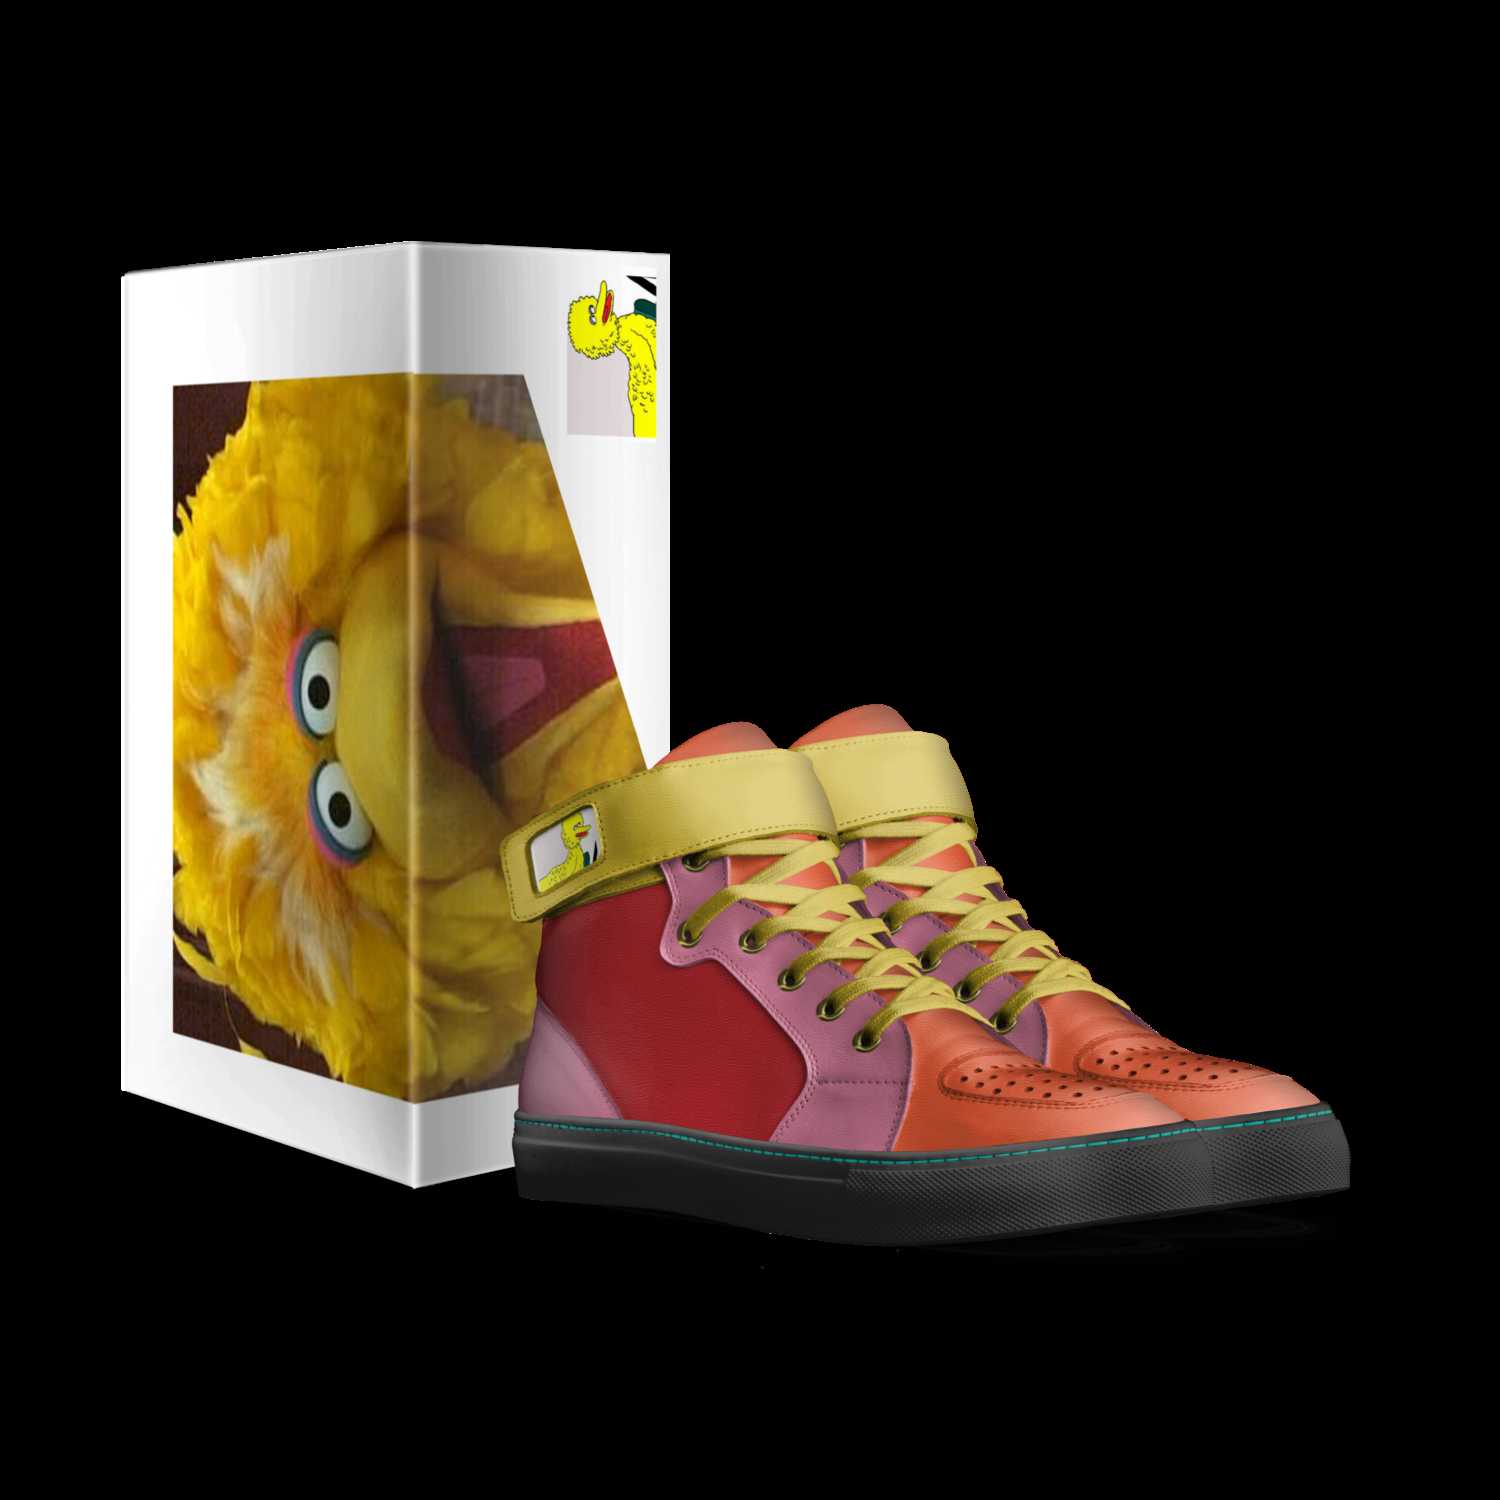 The Big Bird | A Custom Shoe concept by 